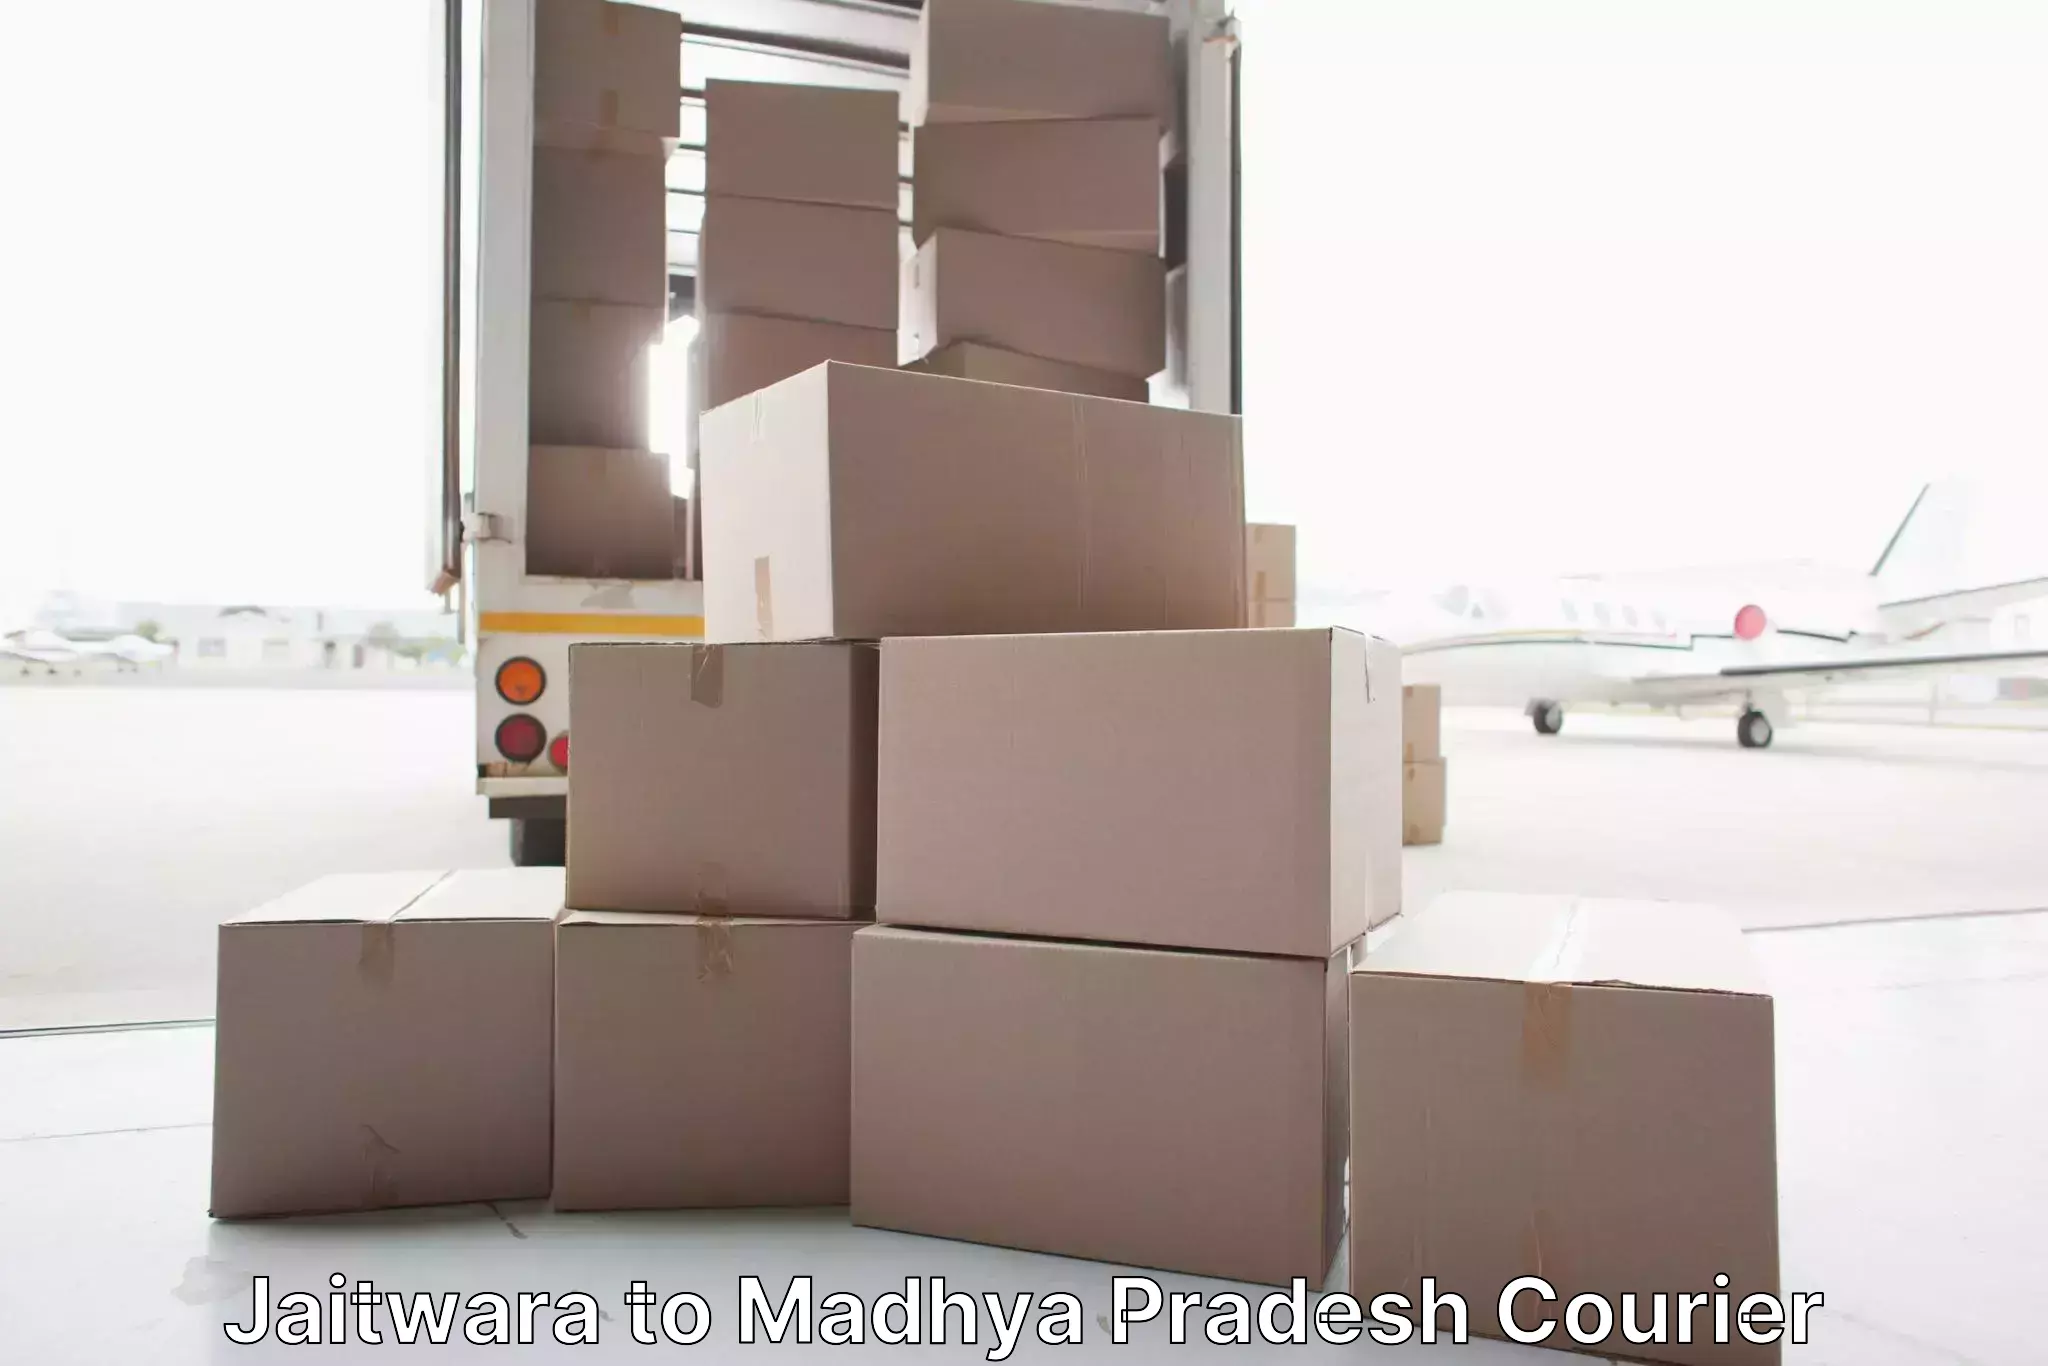 Trusted moving company Jaitwara to Hatta